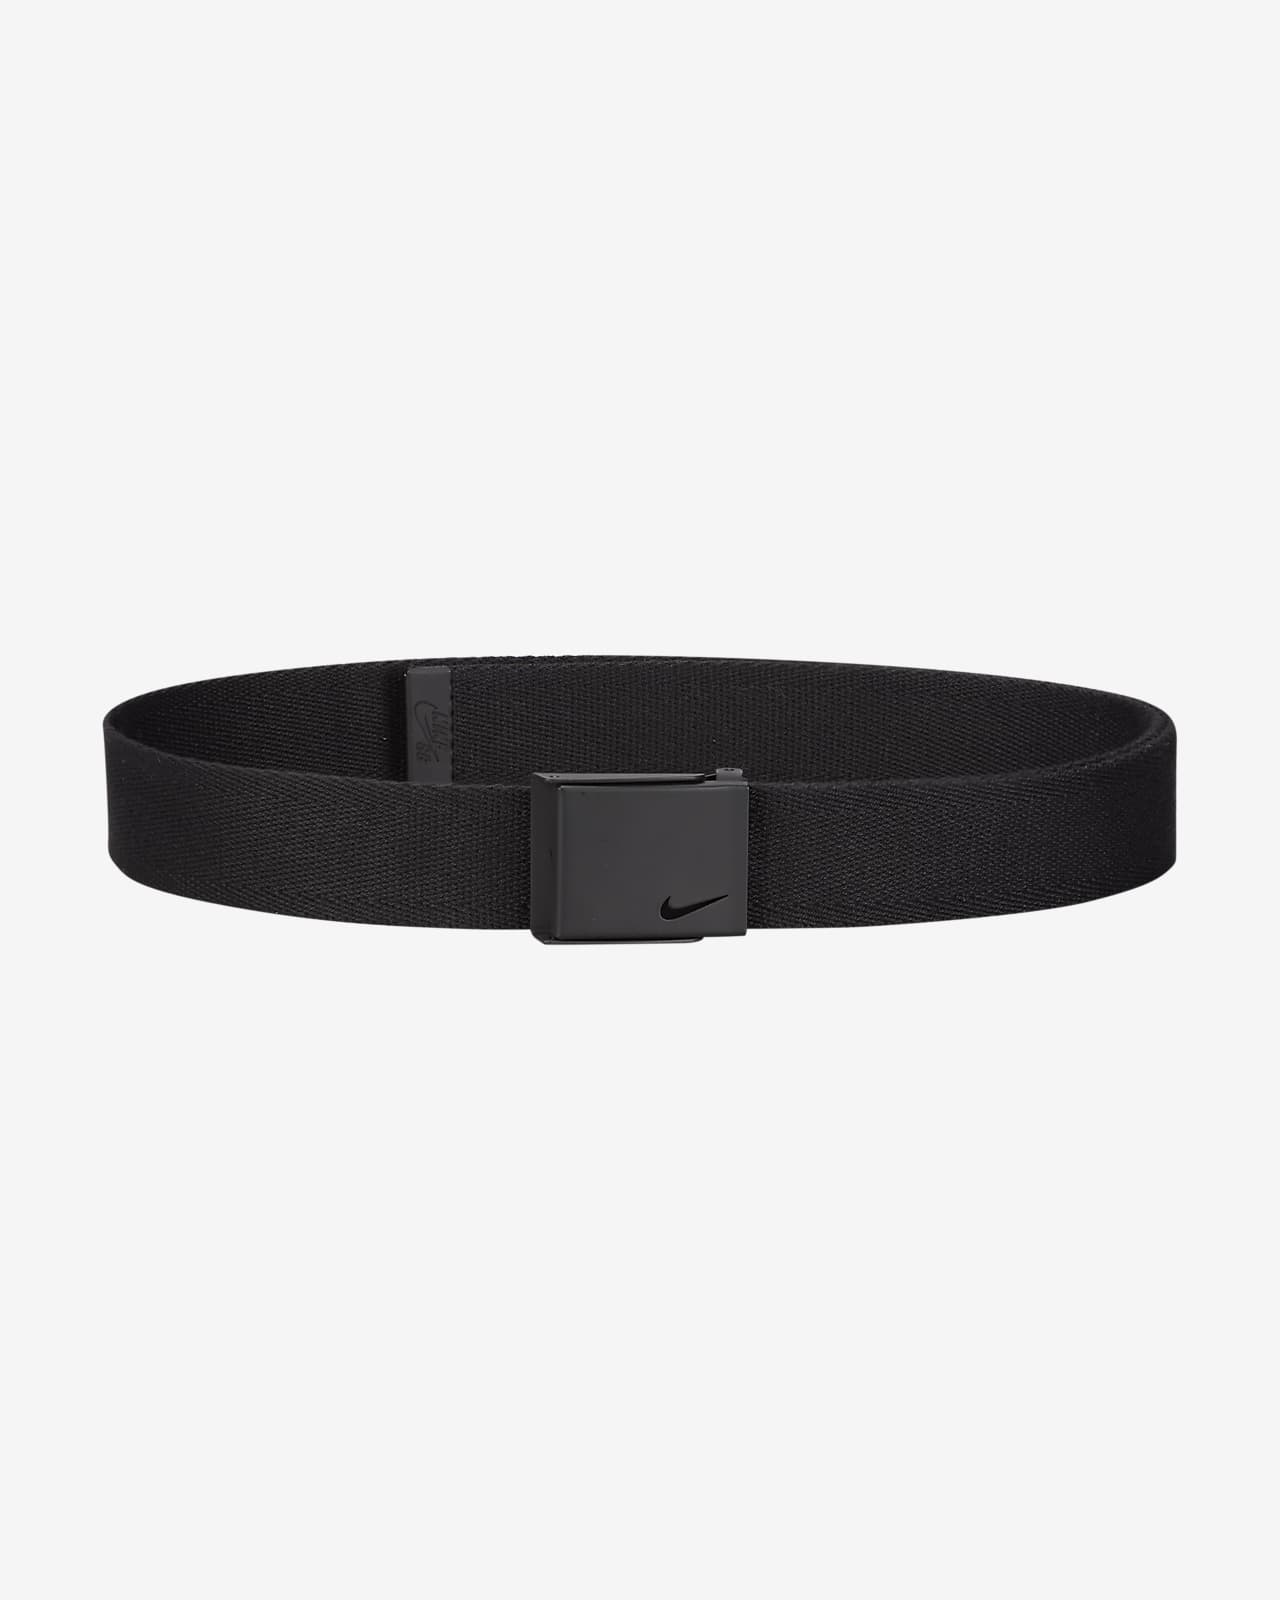 Nike SB Futura Single Web Belt